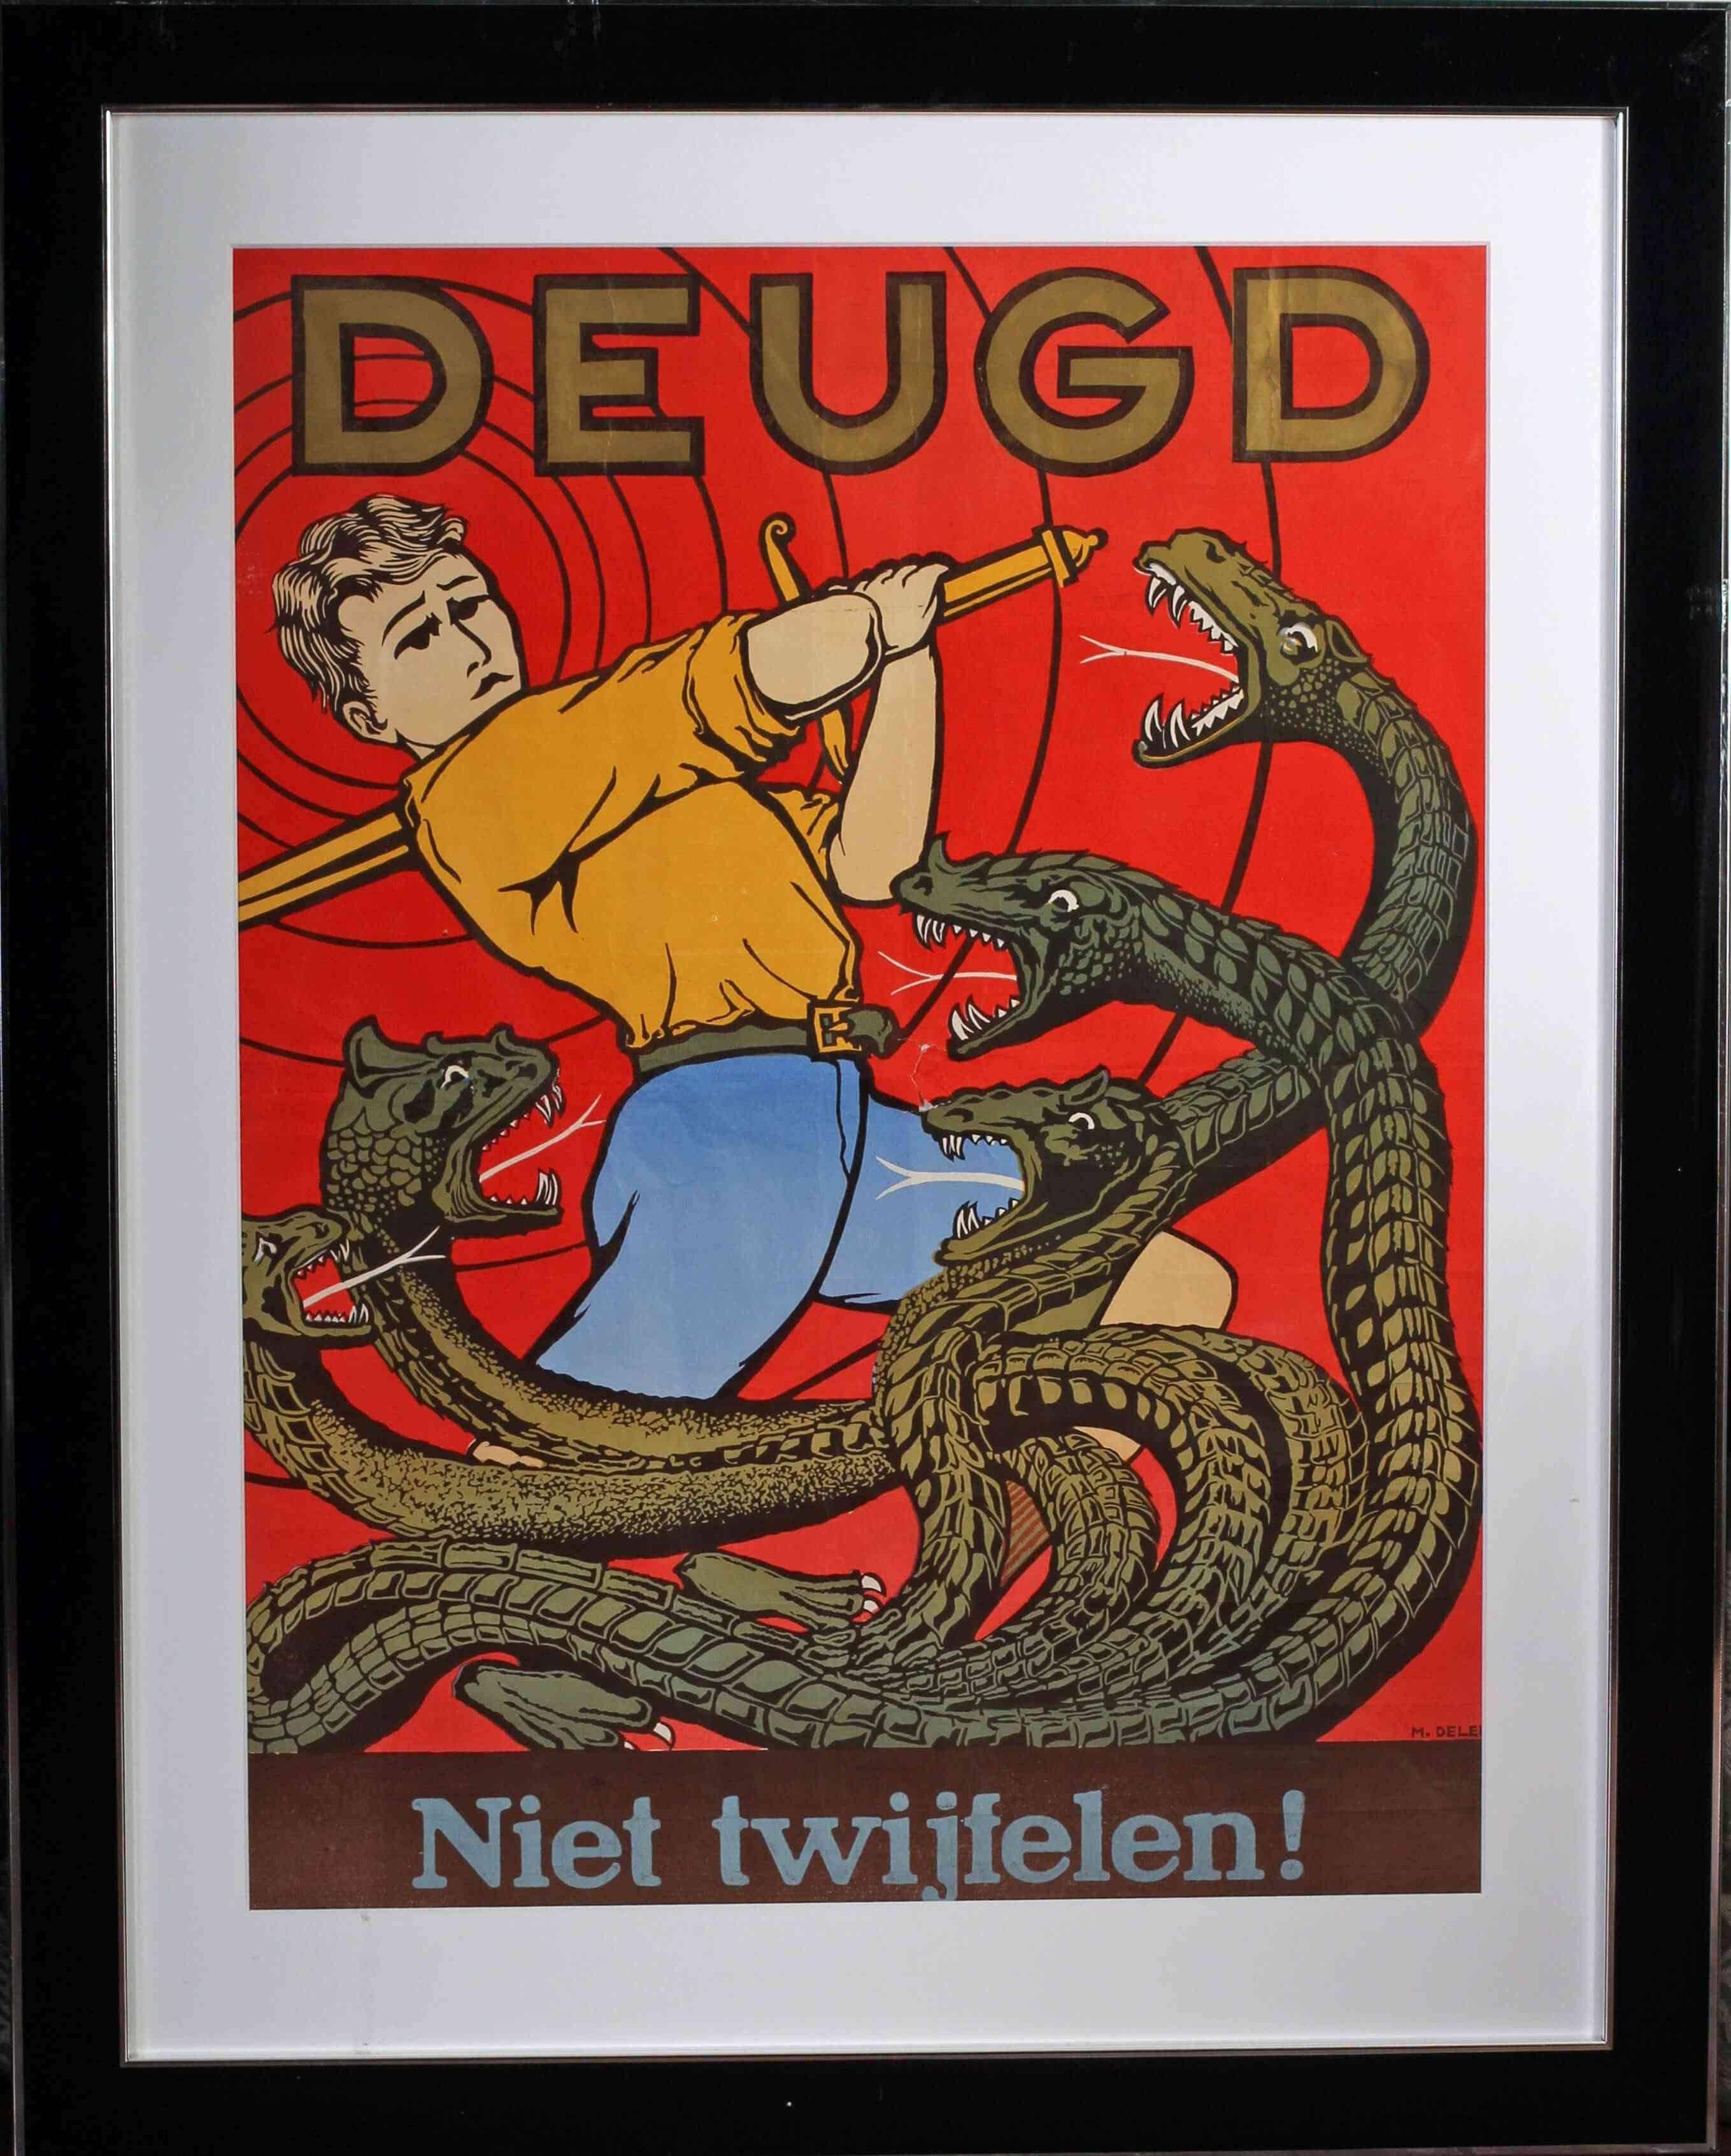 Original 1930s Dutch propaganda poster by M. Deleu (Virtue - do not doubt)